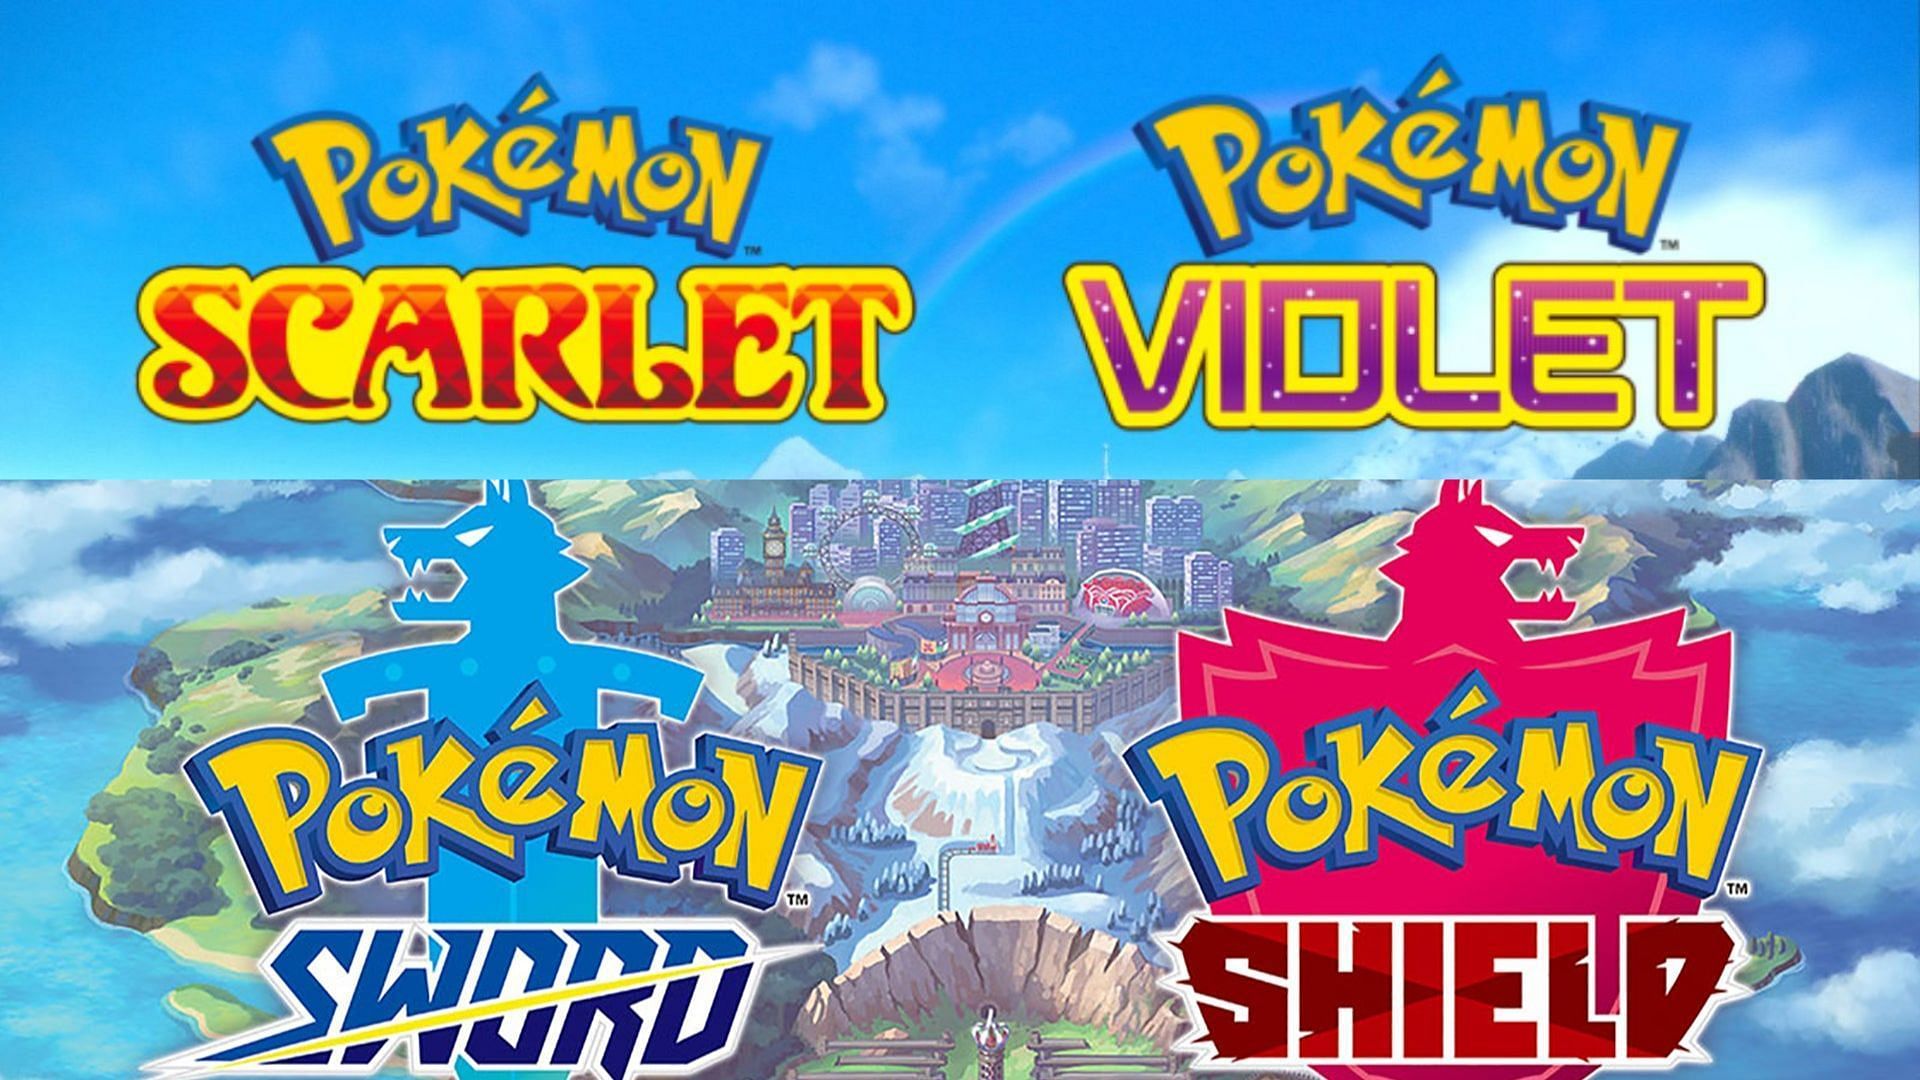 Is Pokemon Scarlet & Violet Or Pokemon Sword & Shield Better?